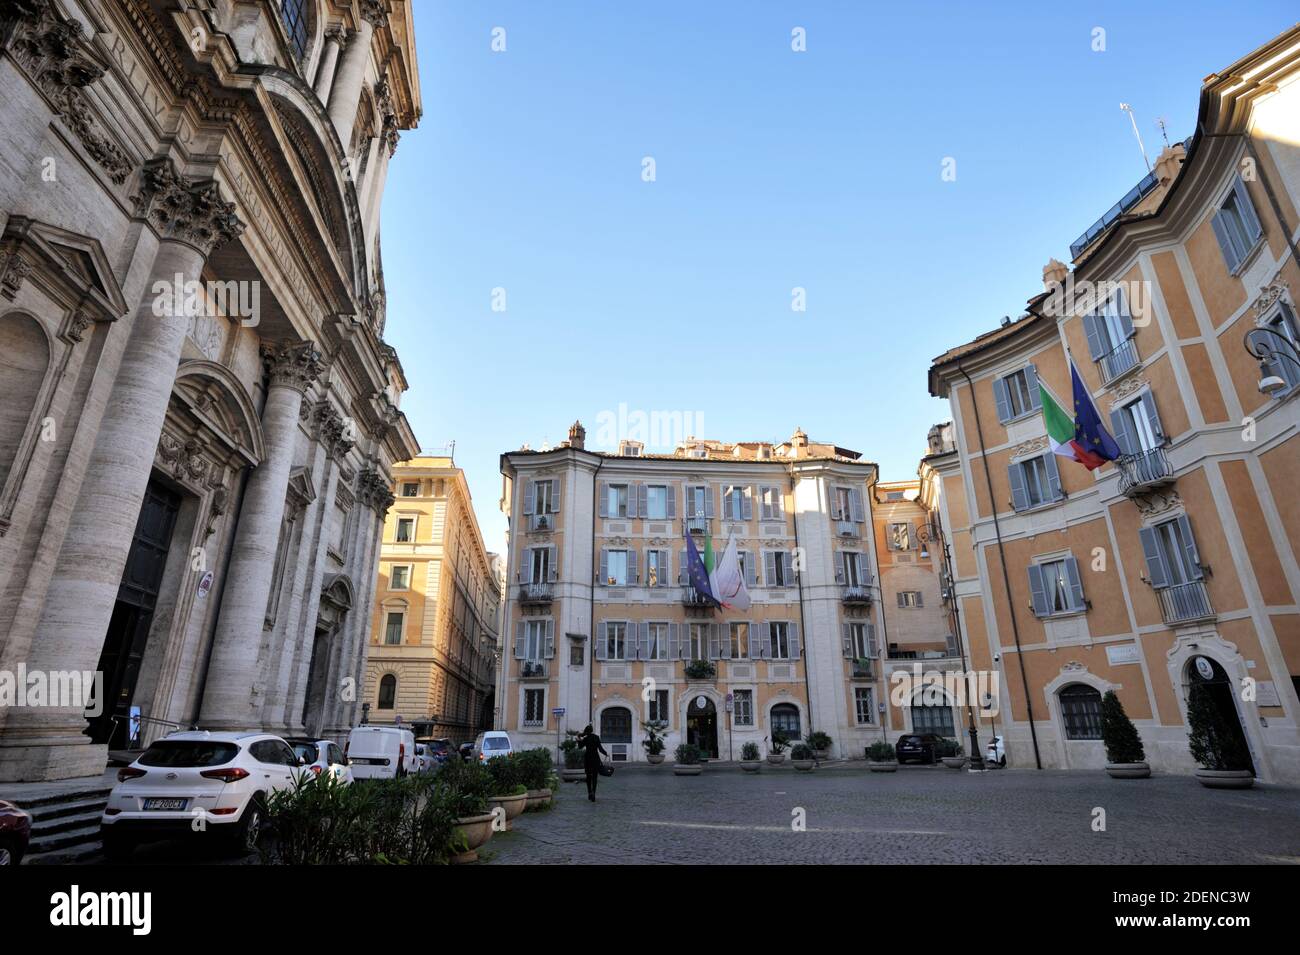 Italie, Rome, Piazza di Sant'ignazio, église de Sant'ignazio et bâtiments rococo (architecte Filippo Raguzzini) Banque D'Images